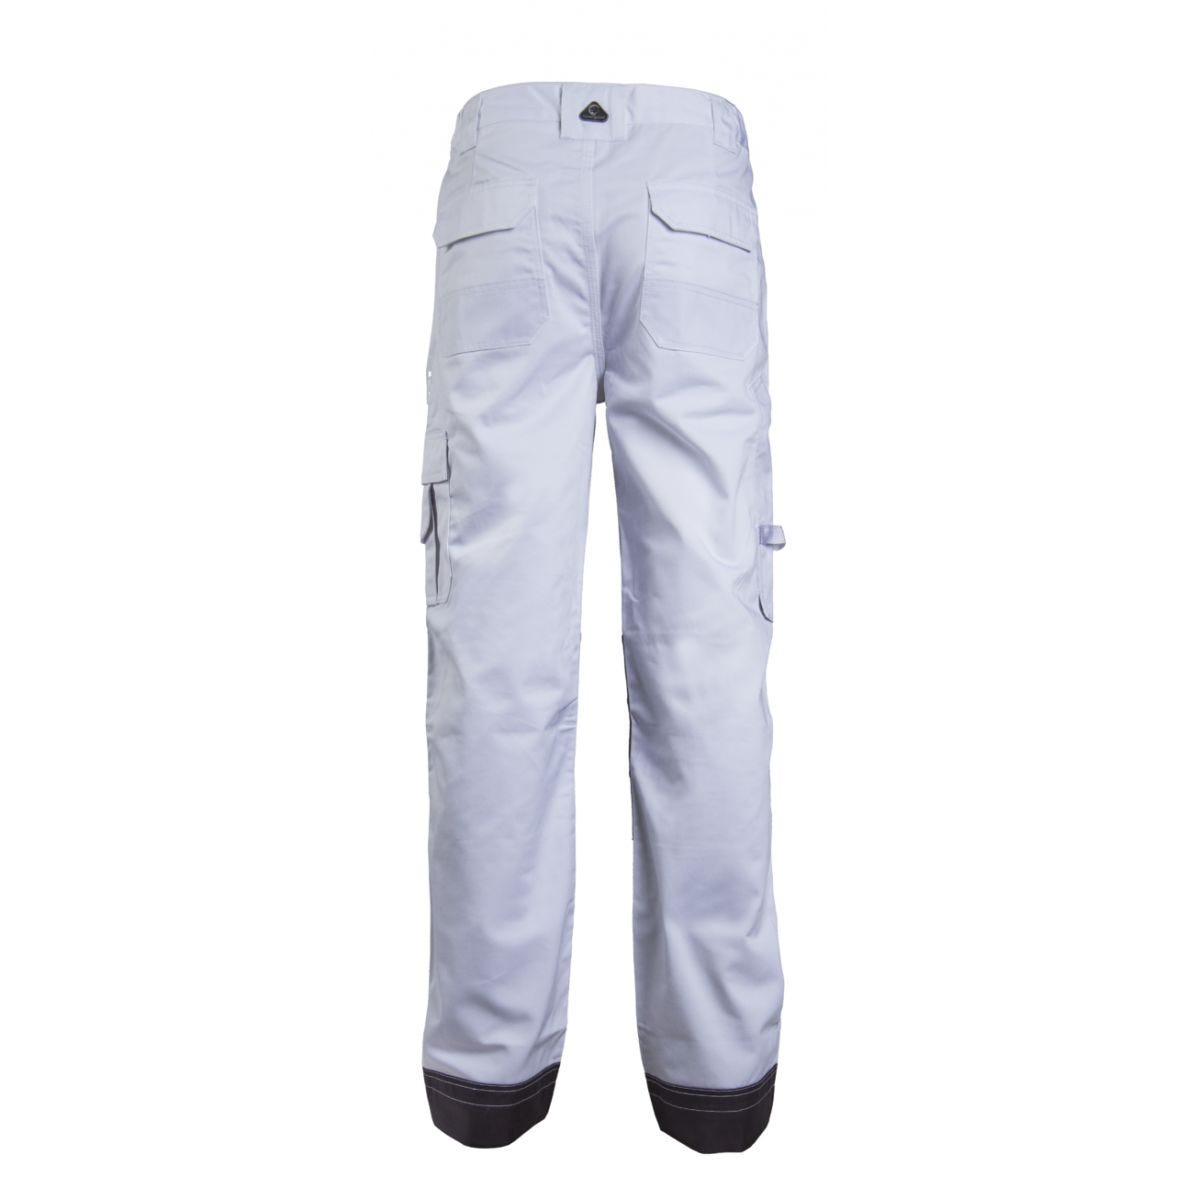 Pantalon CLASS blanc - COVERGUARD - Taille 2XL 1